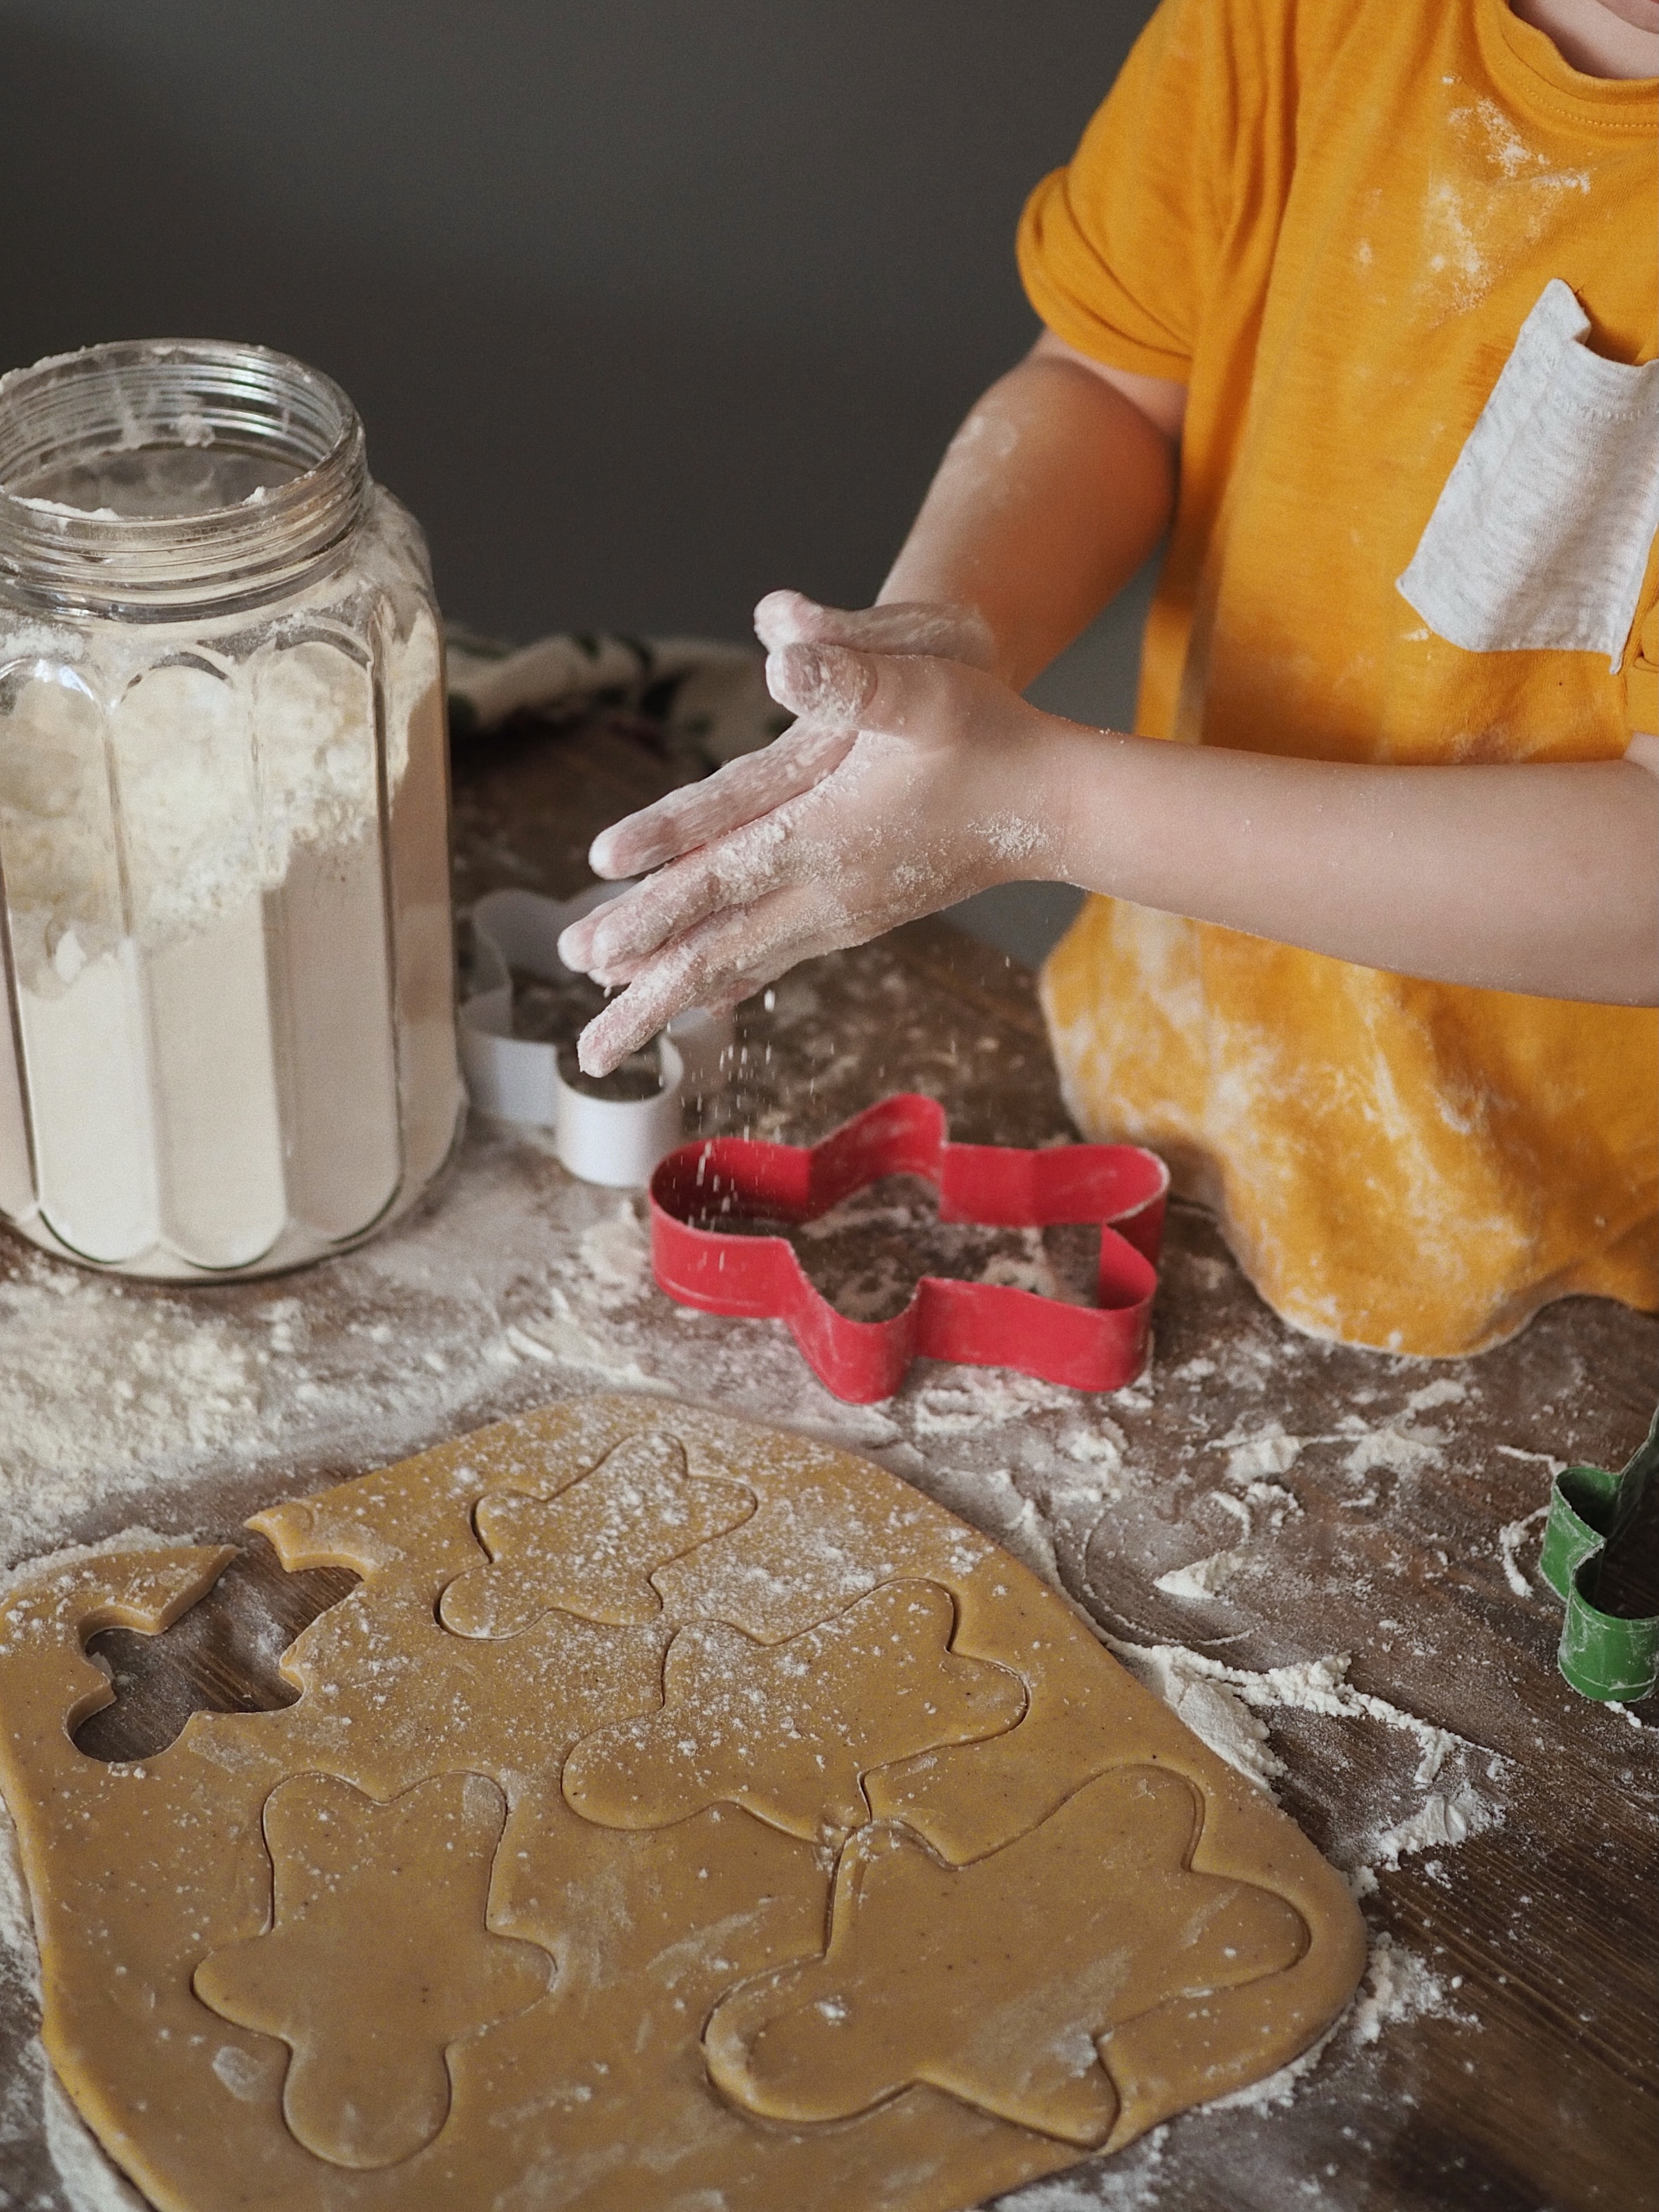 Child making cookies | Source: Unsplash